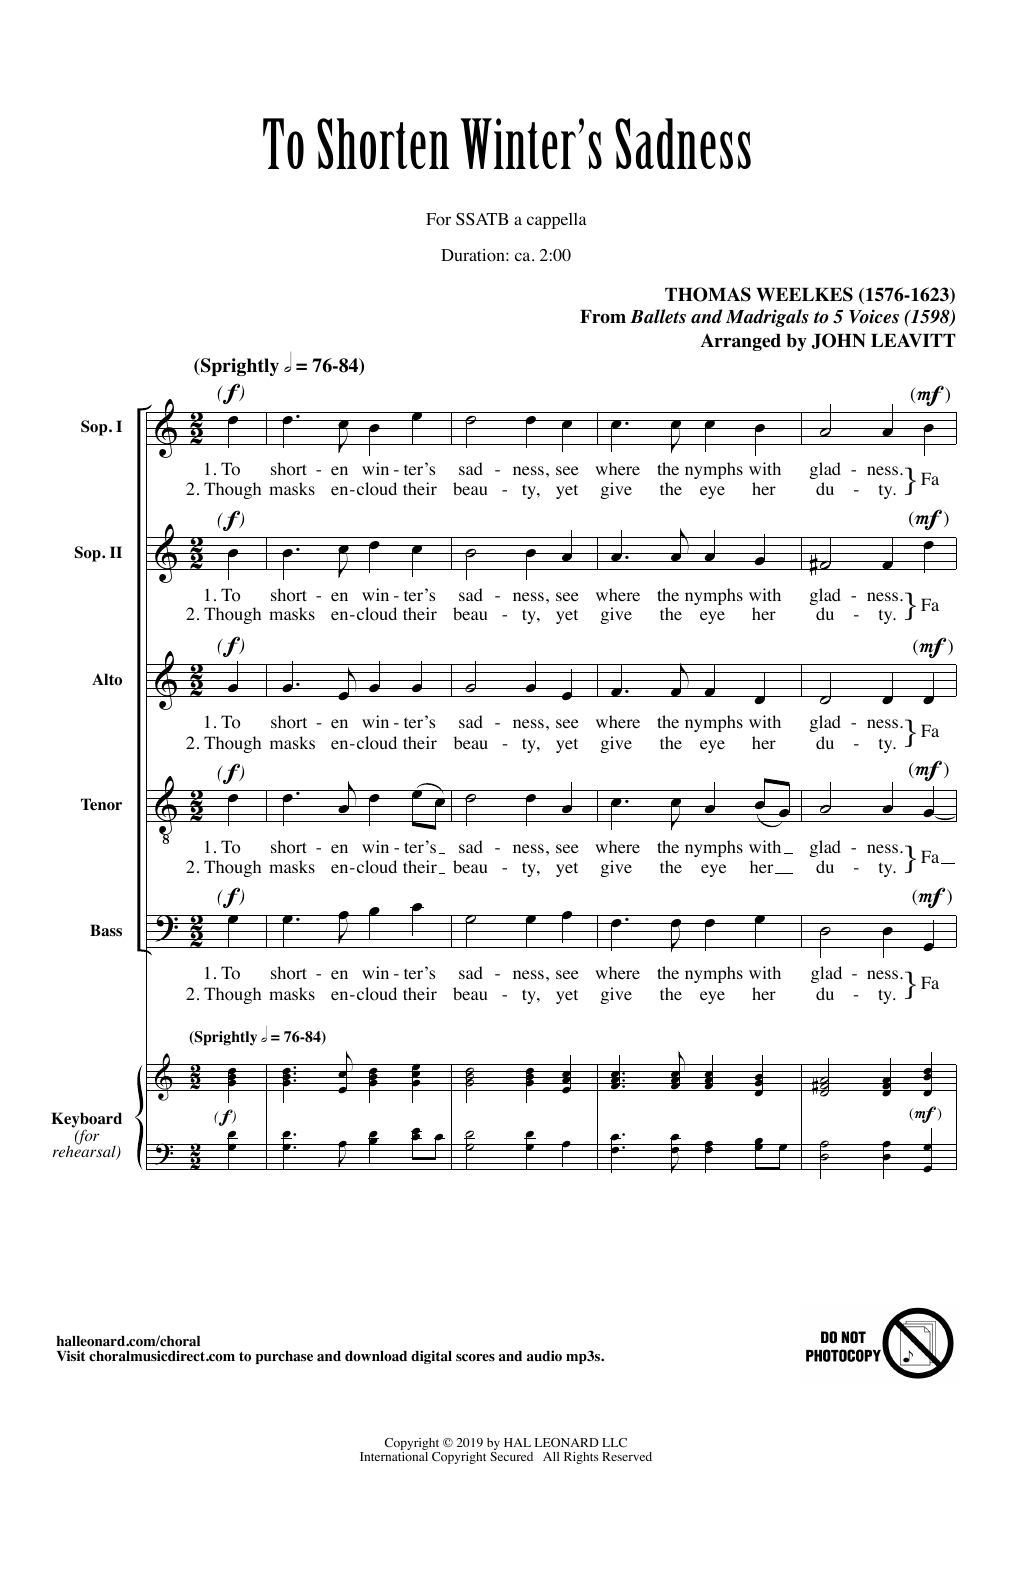 Thomas Weelkes To Shorten Winter's Sadness (arr. John Leavitt) Sheet Music Notes & Chords for SATB Choir - Download or Print PDF